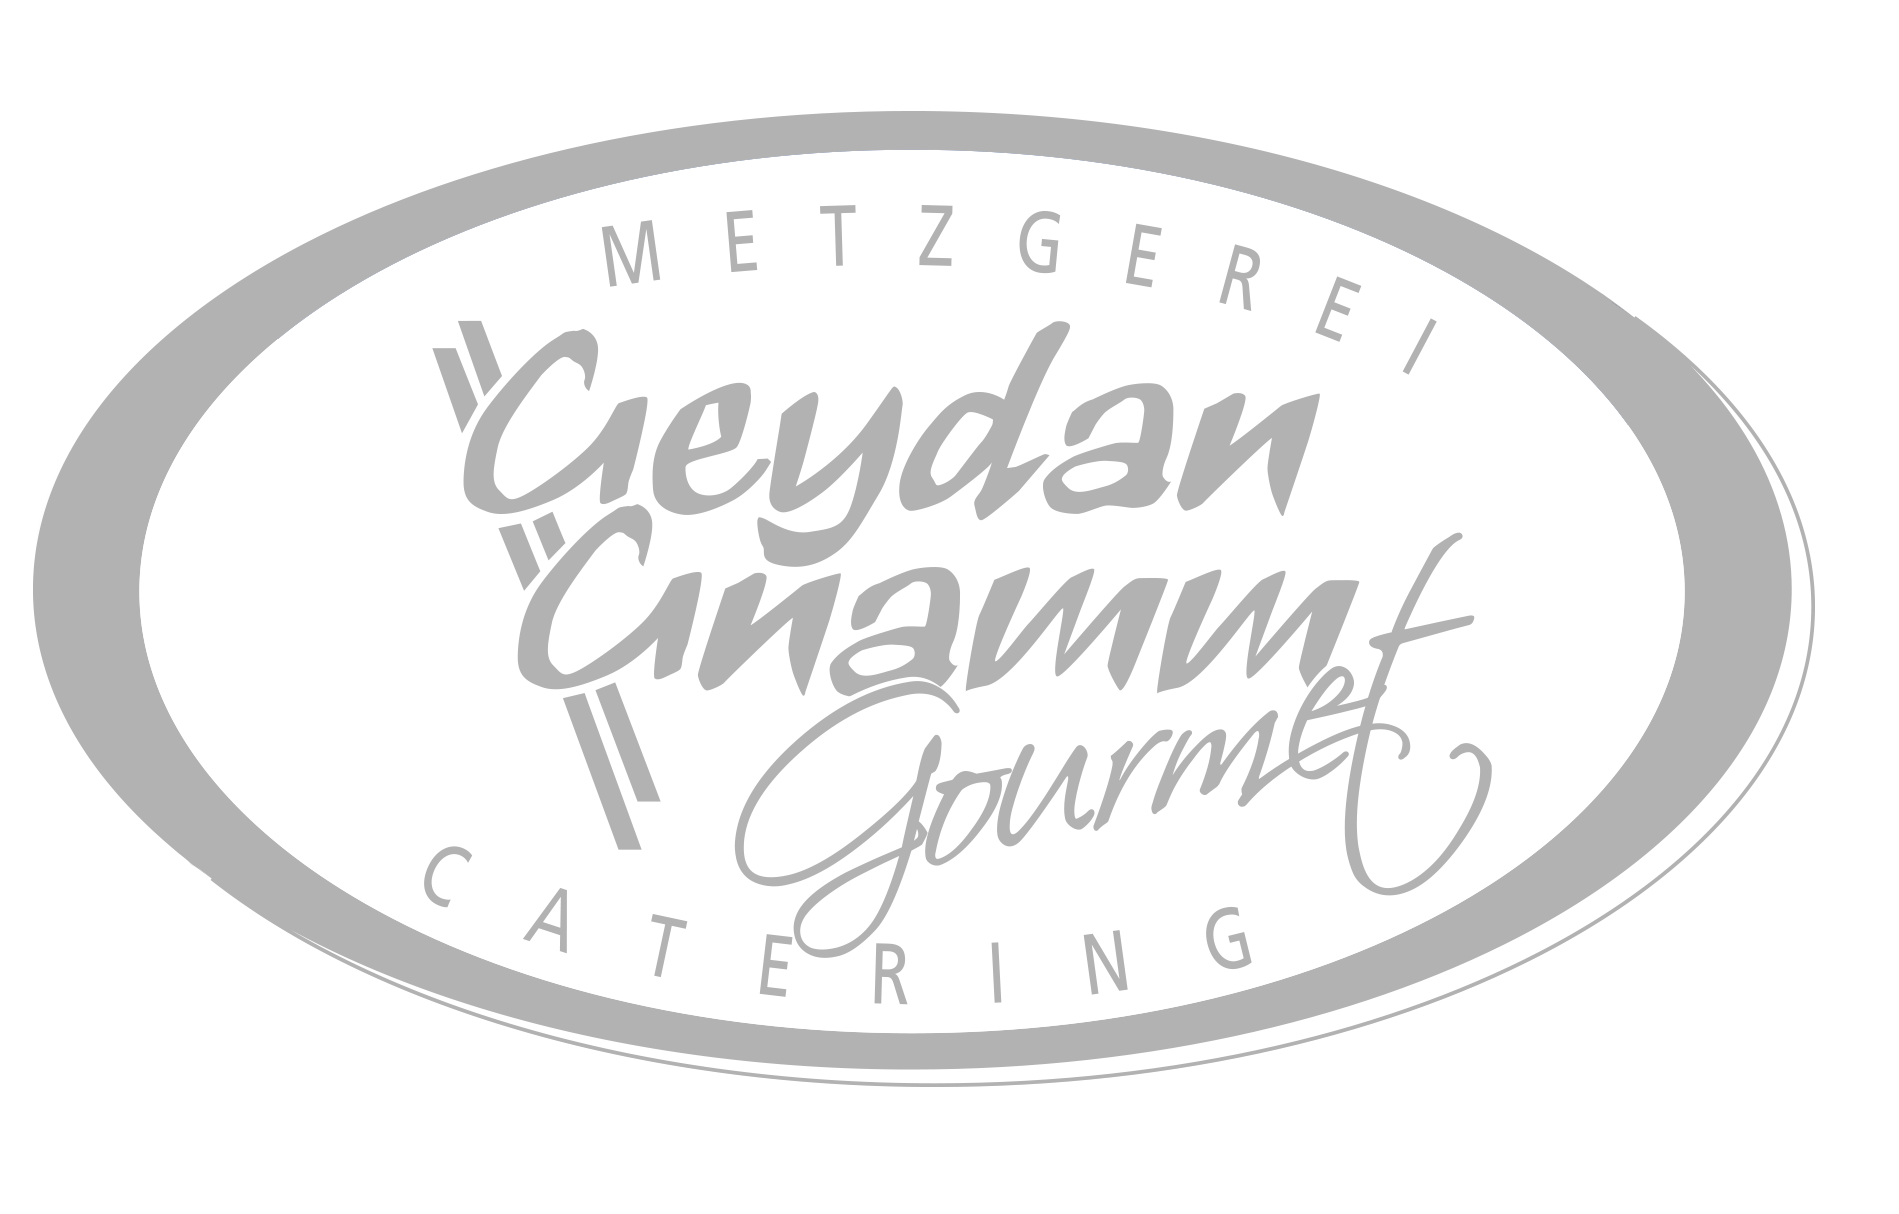 Geydan-Gnamm GmbH